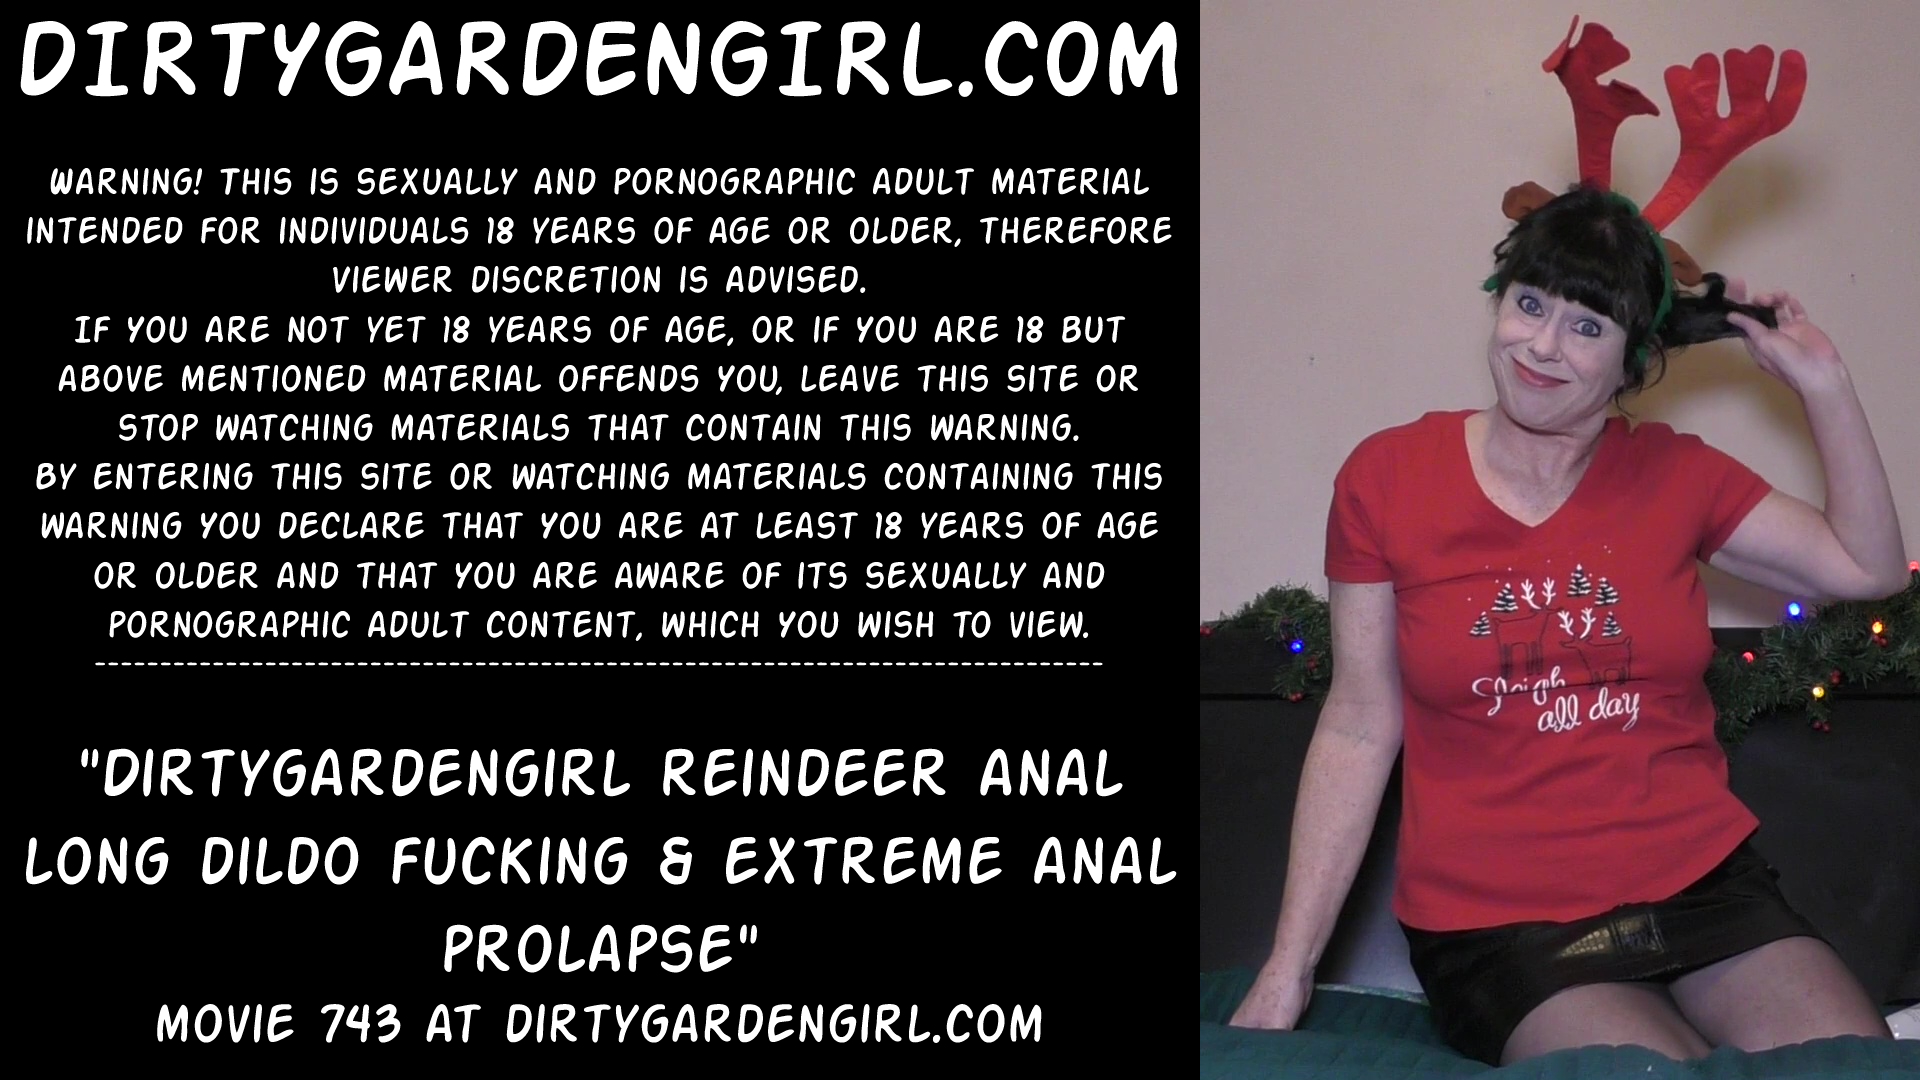 Dirtygardengirl reindeer anal dildo fucking & prolapse